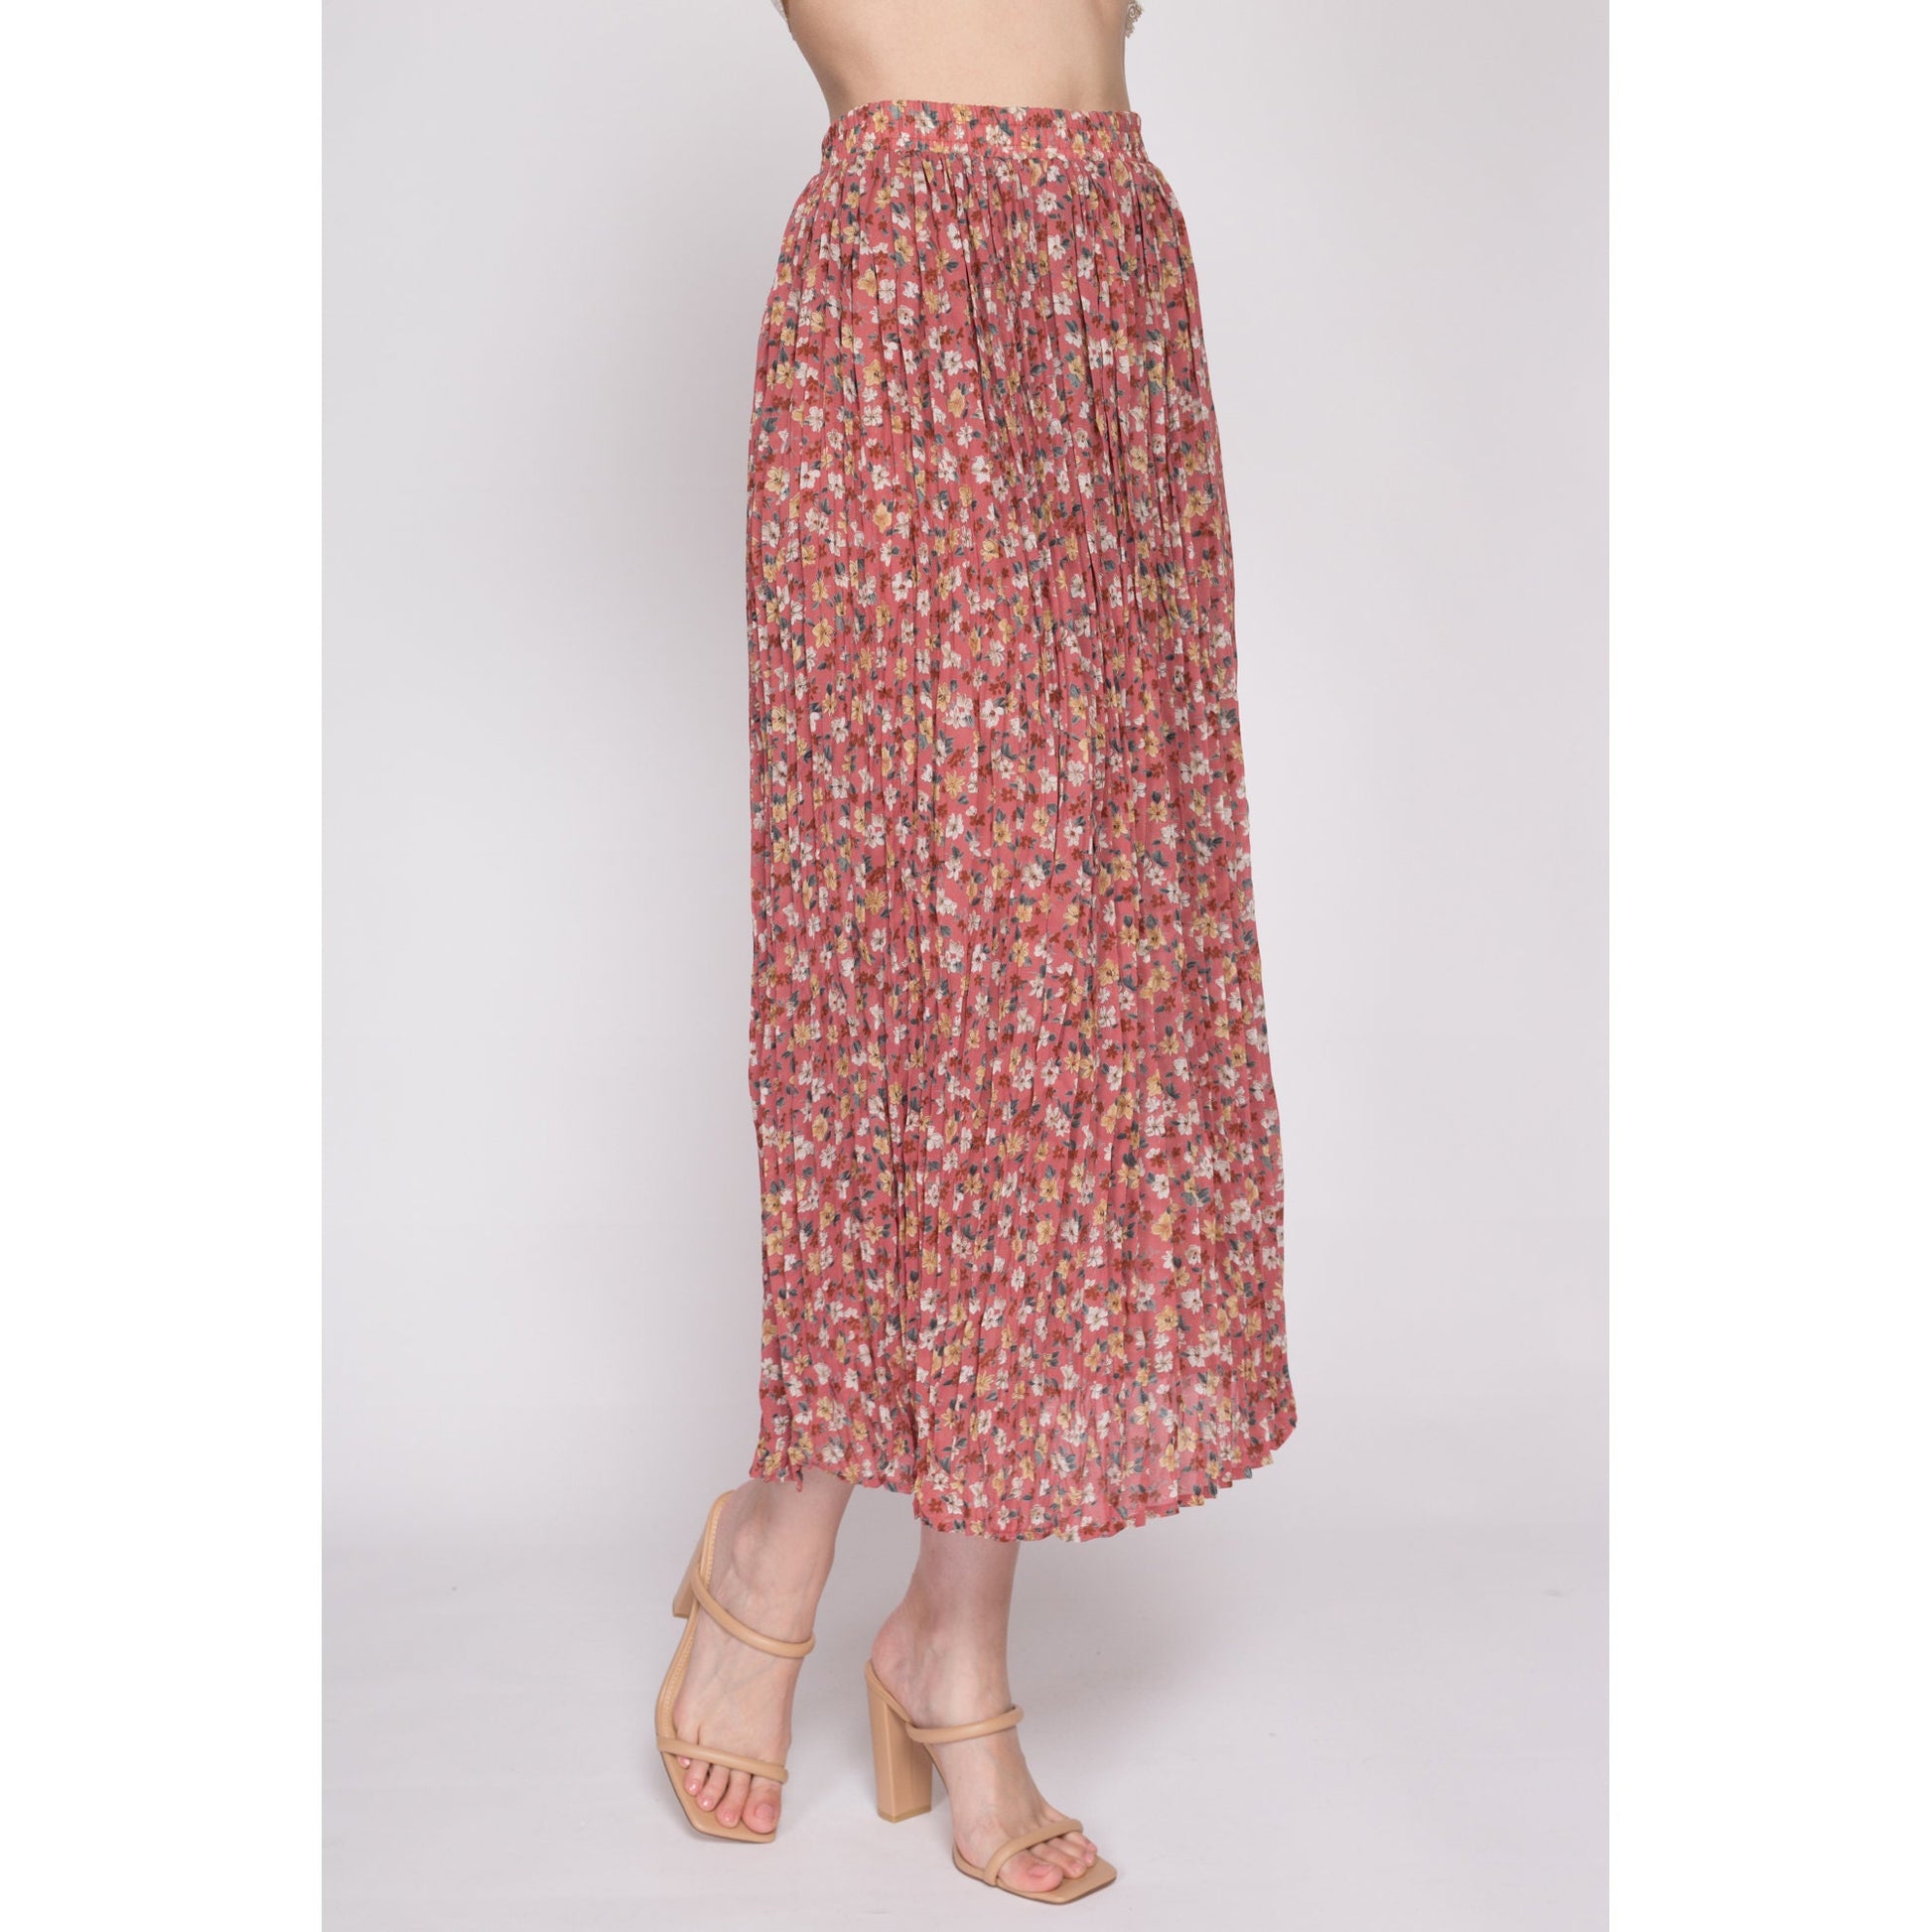 S| 90s Pink Floral Crinkle Pleated Midi Skirt - Small | Vintage High Waist Boho A Line Flowy Skirt